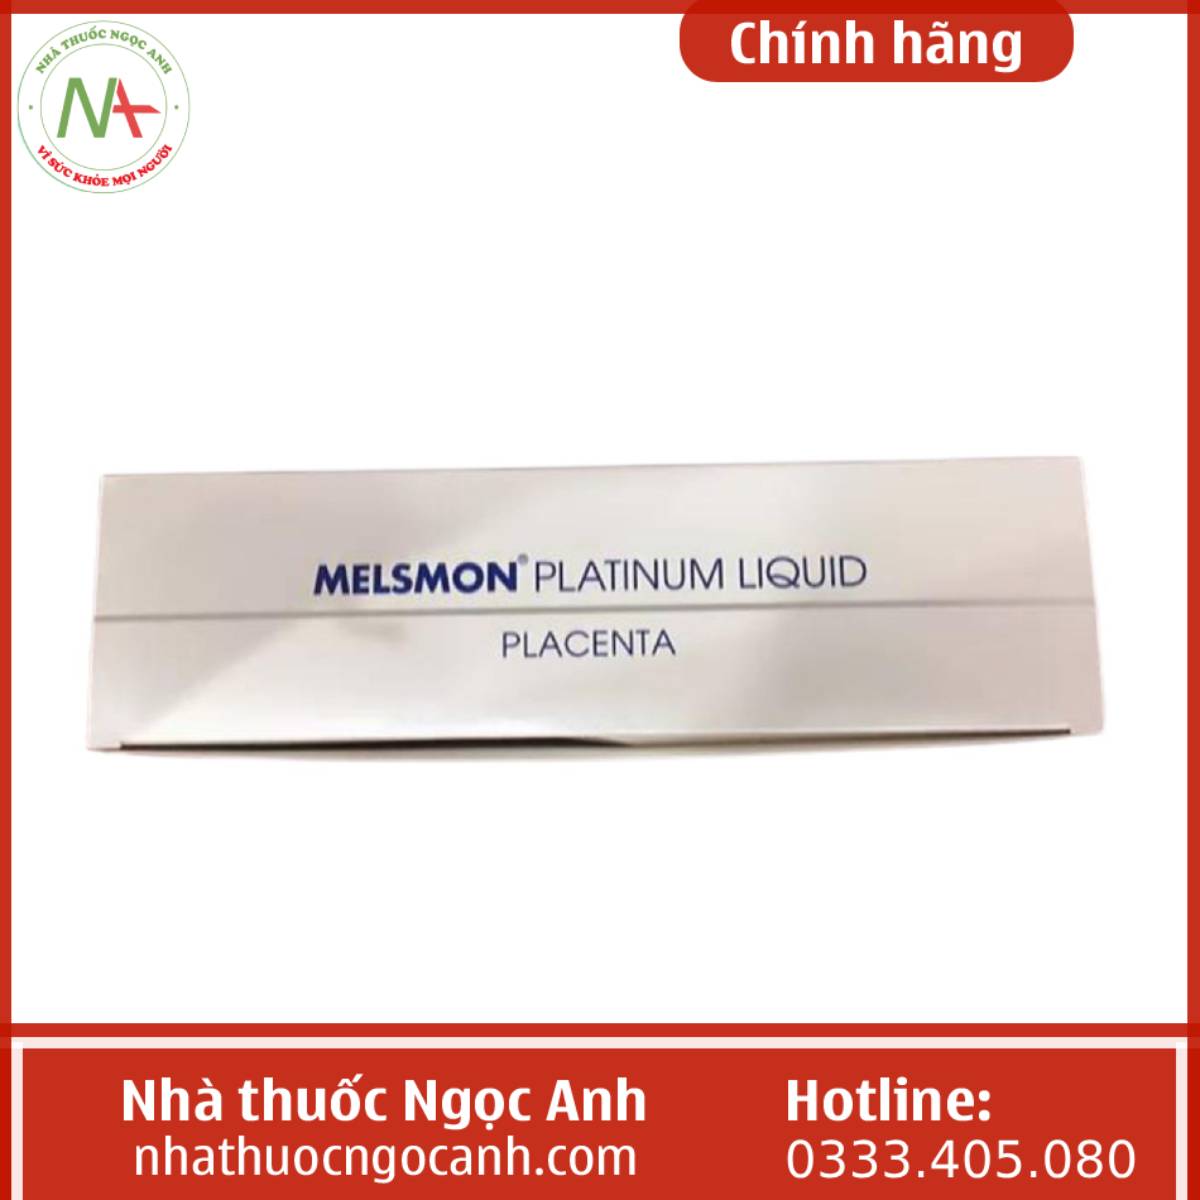 Nước uống nhau thai ngựa của Nhật Bản - Melsmon Platinum Liquid